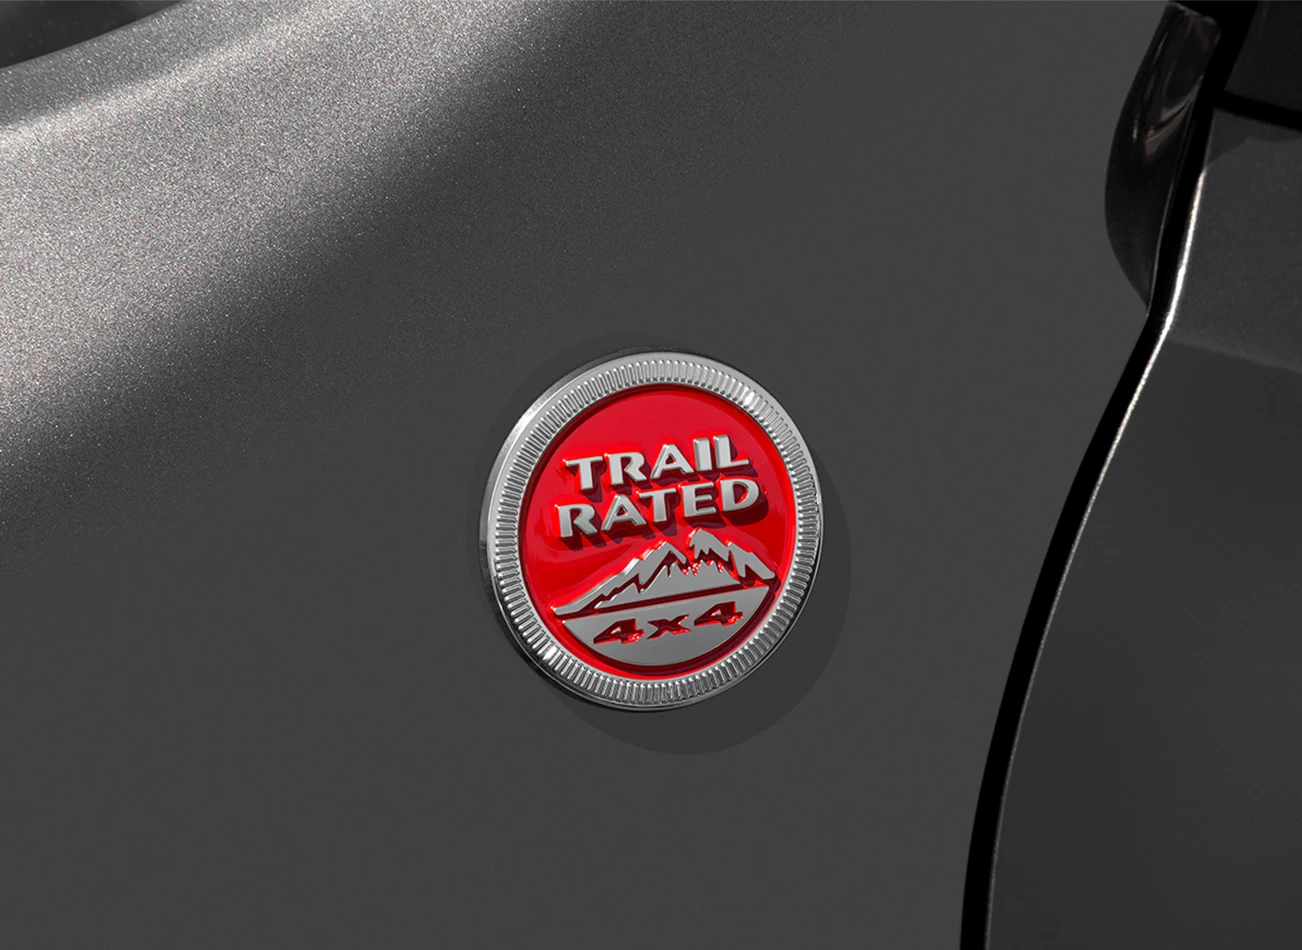 2021 Jeep Renegade: Trail rated 4x4 emblem 